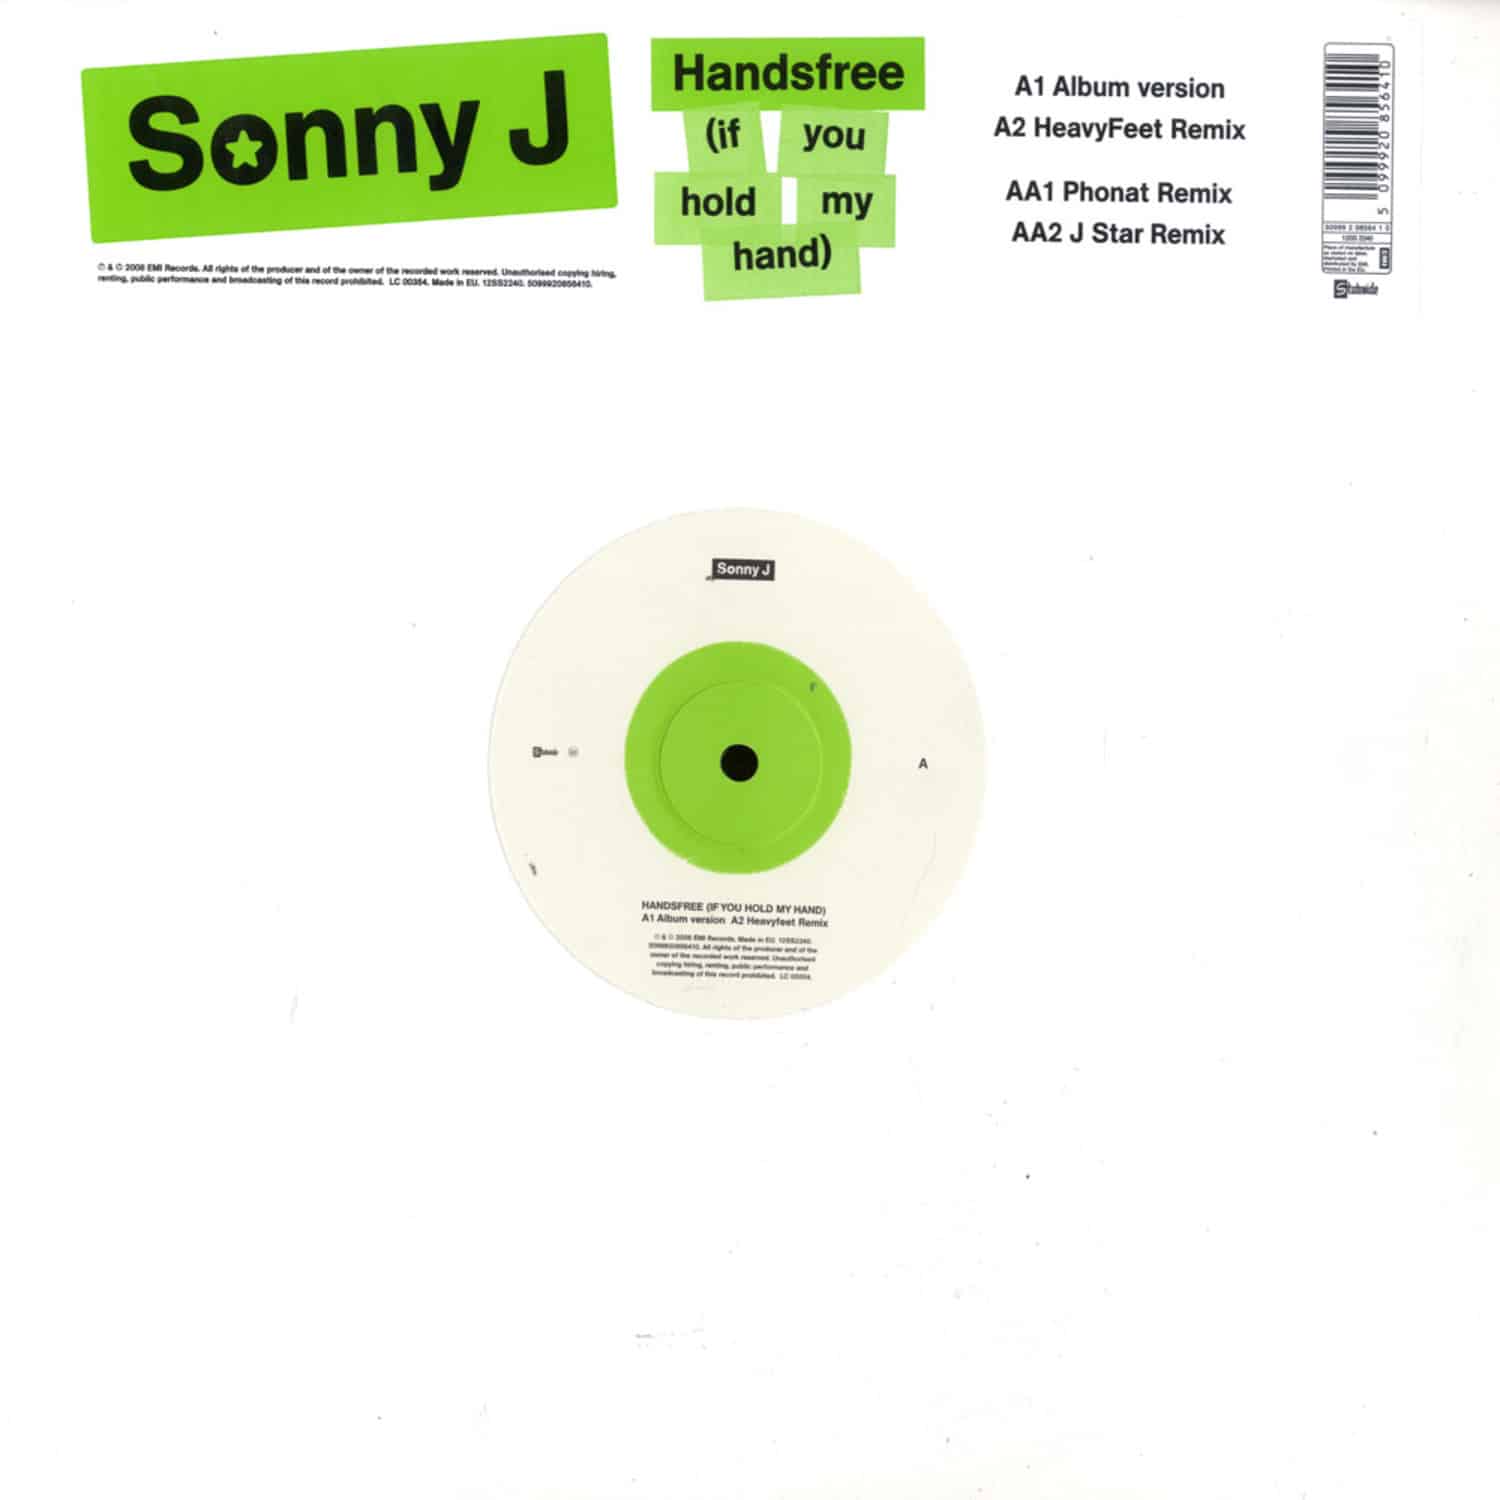 Sonny J - HANDSFREE